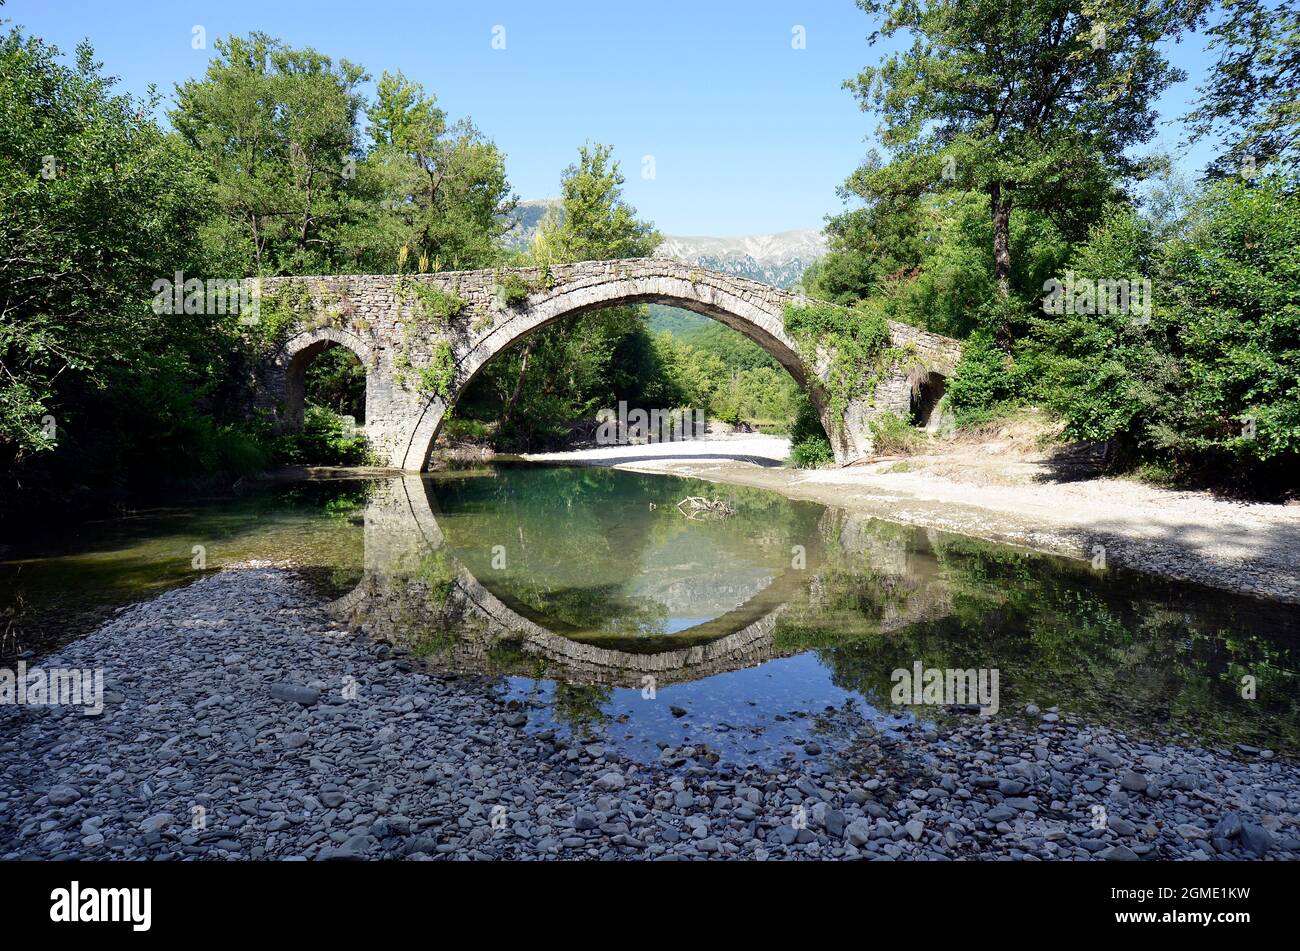 Greece, ancient stone bridge Kamber Aga aka Kamper Aga crossing Zagoritikos river Stock Photo